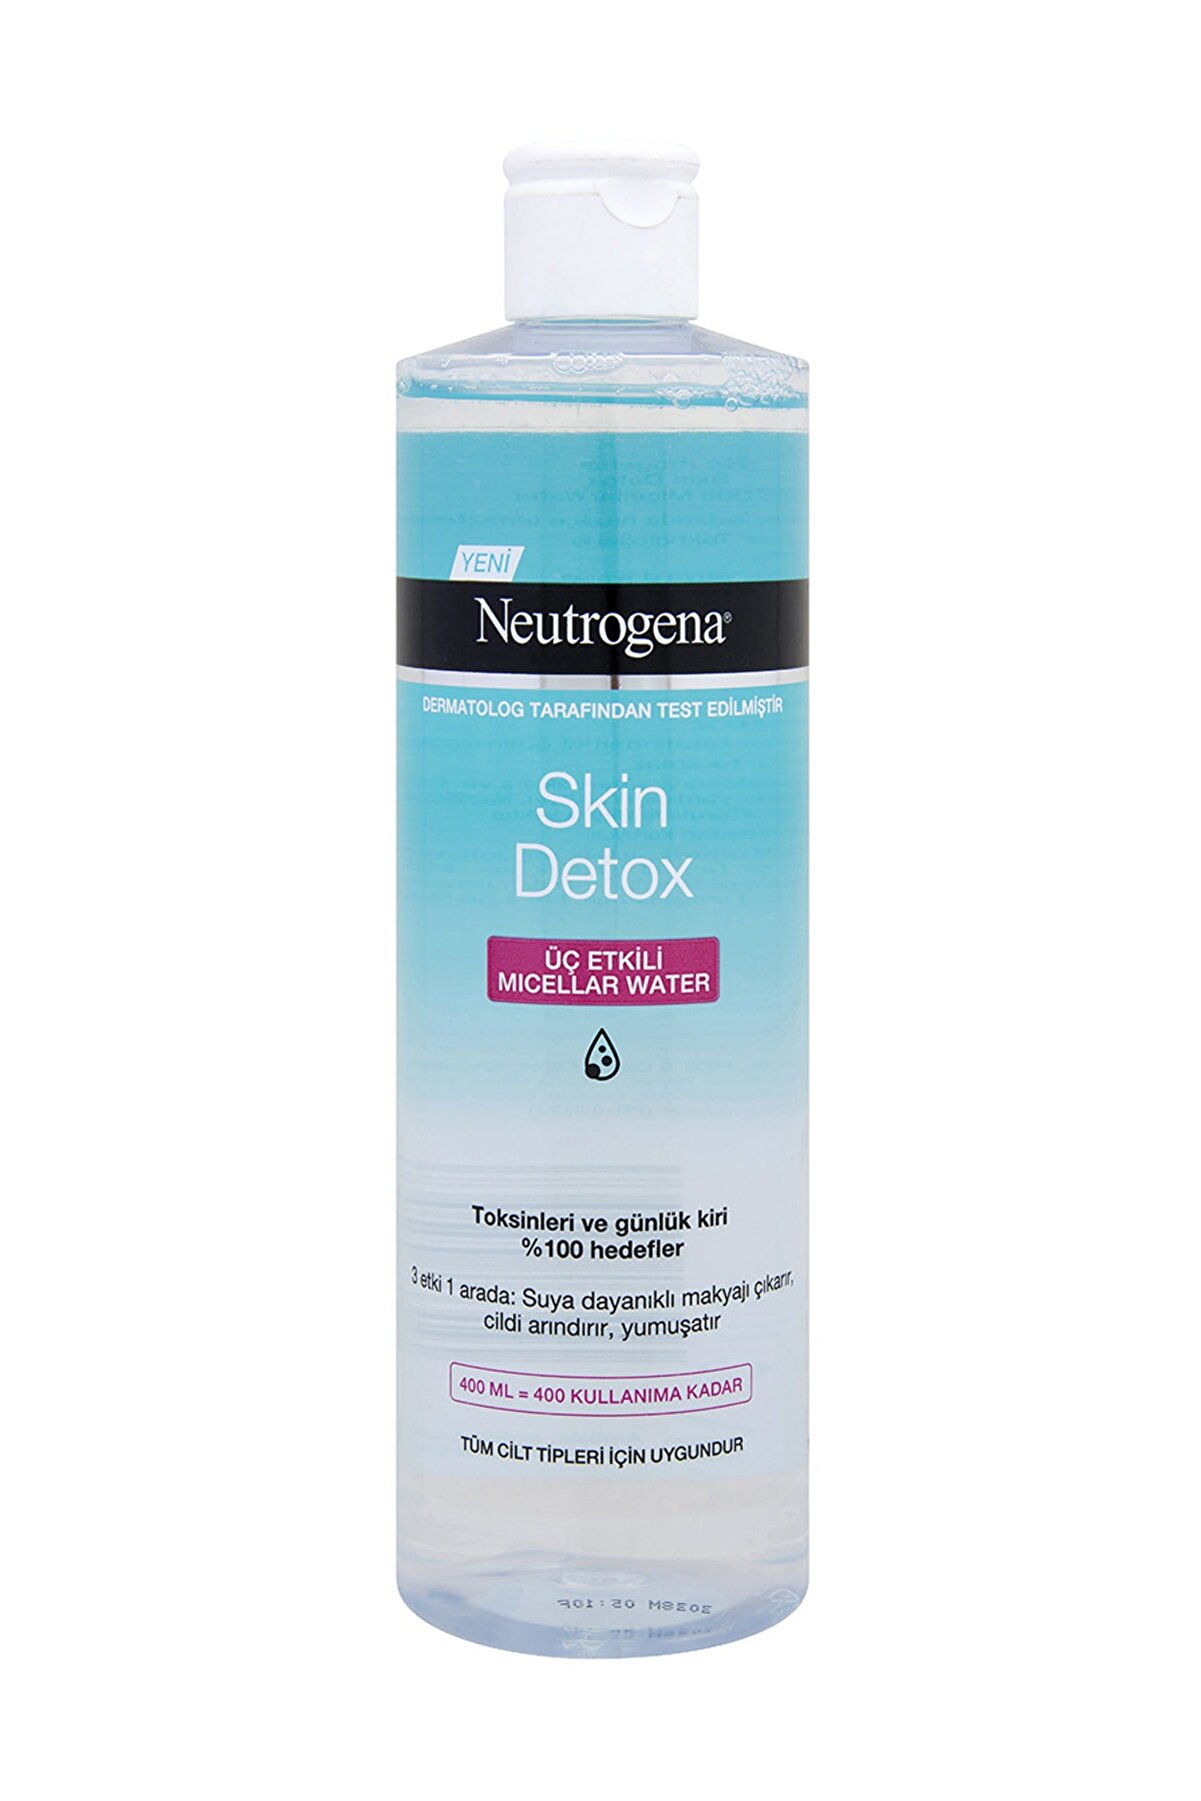 Neutrogena Skin Detox 3 Etkili Micellar Water 400Ml